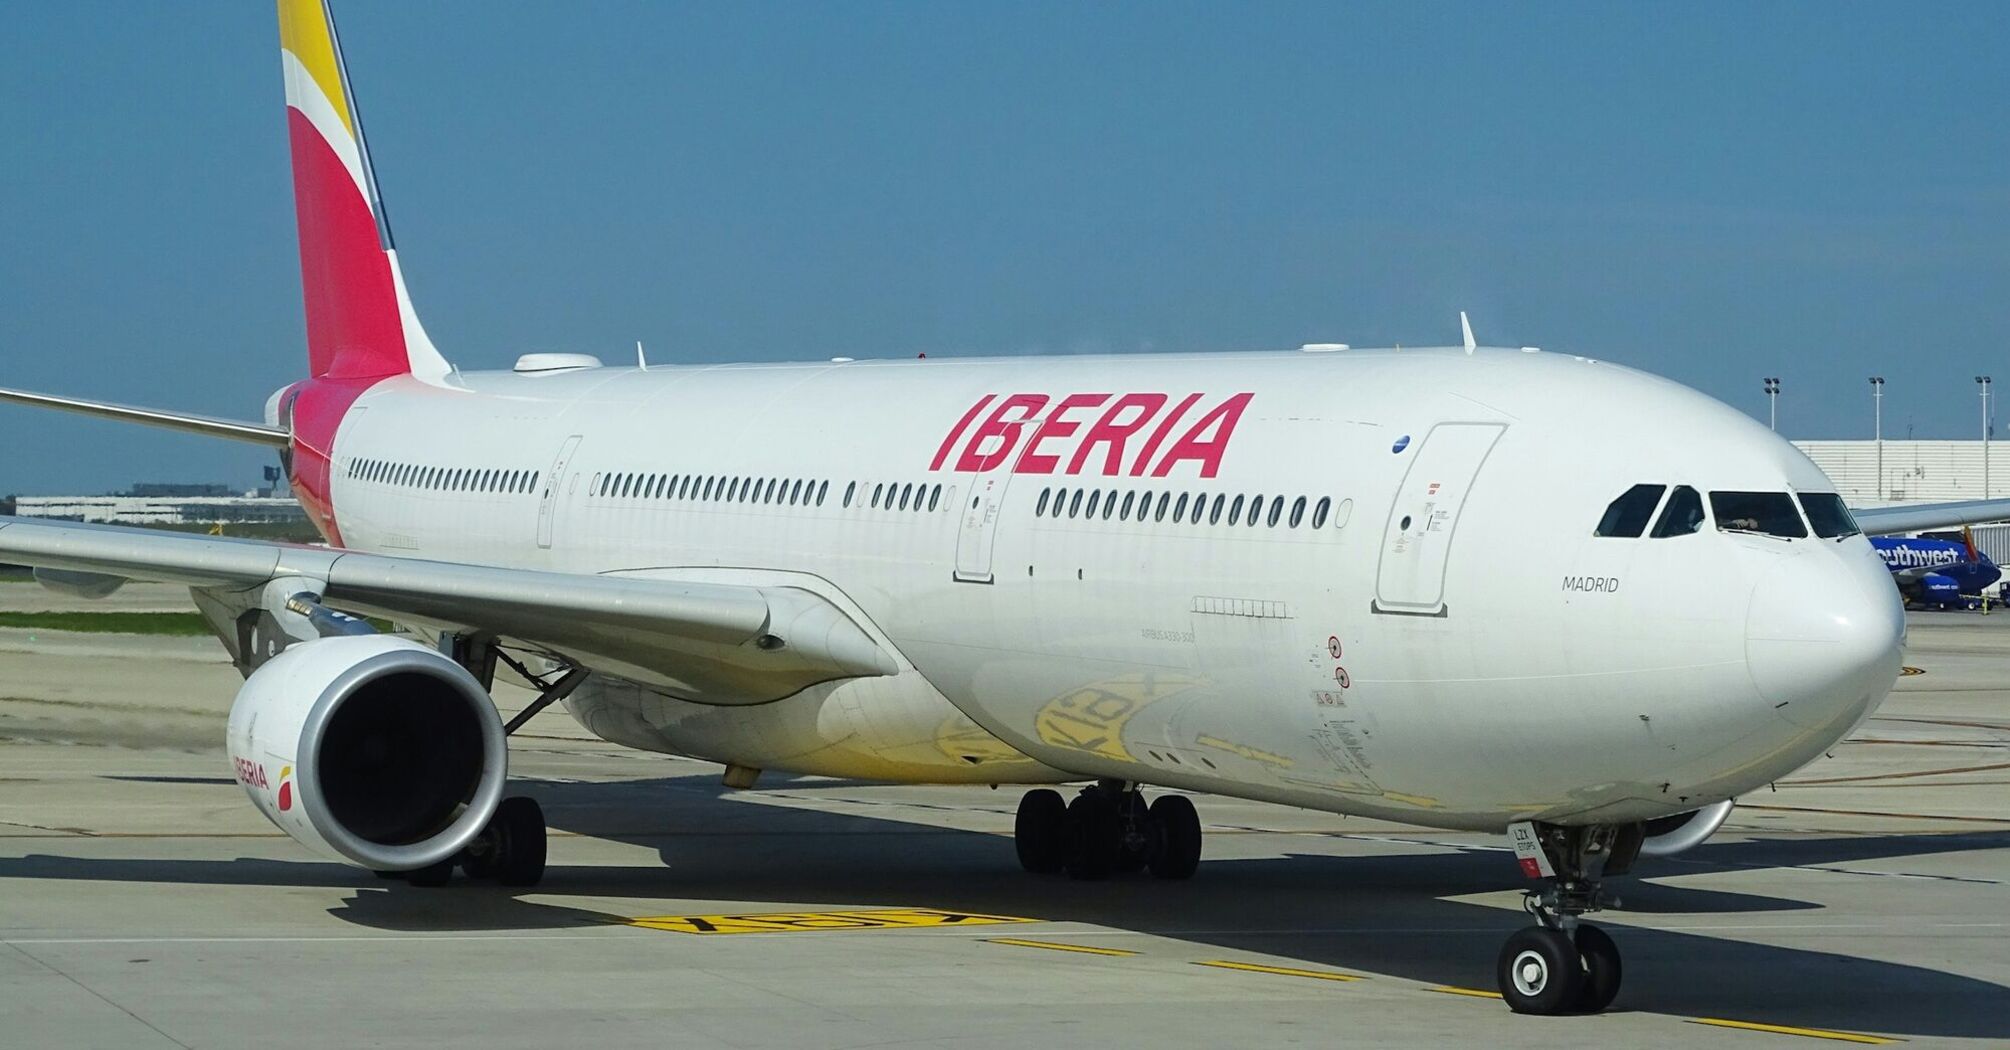 Iberia airplane on the runway